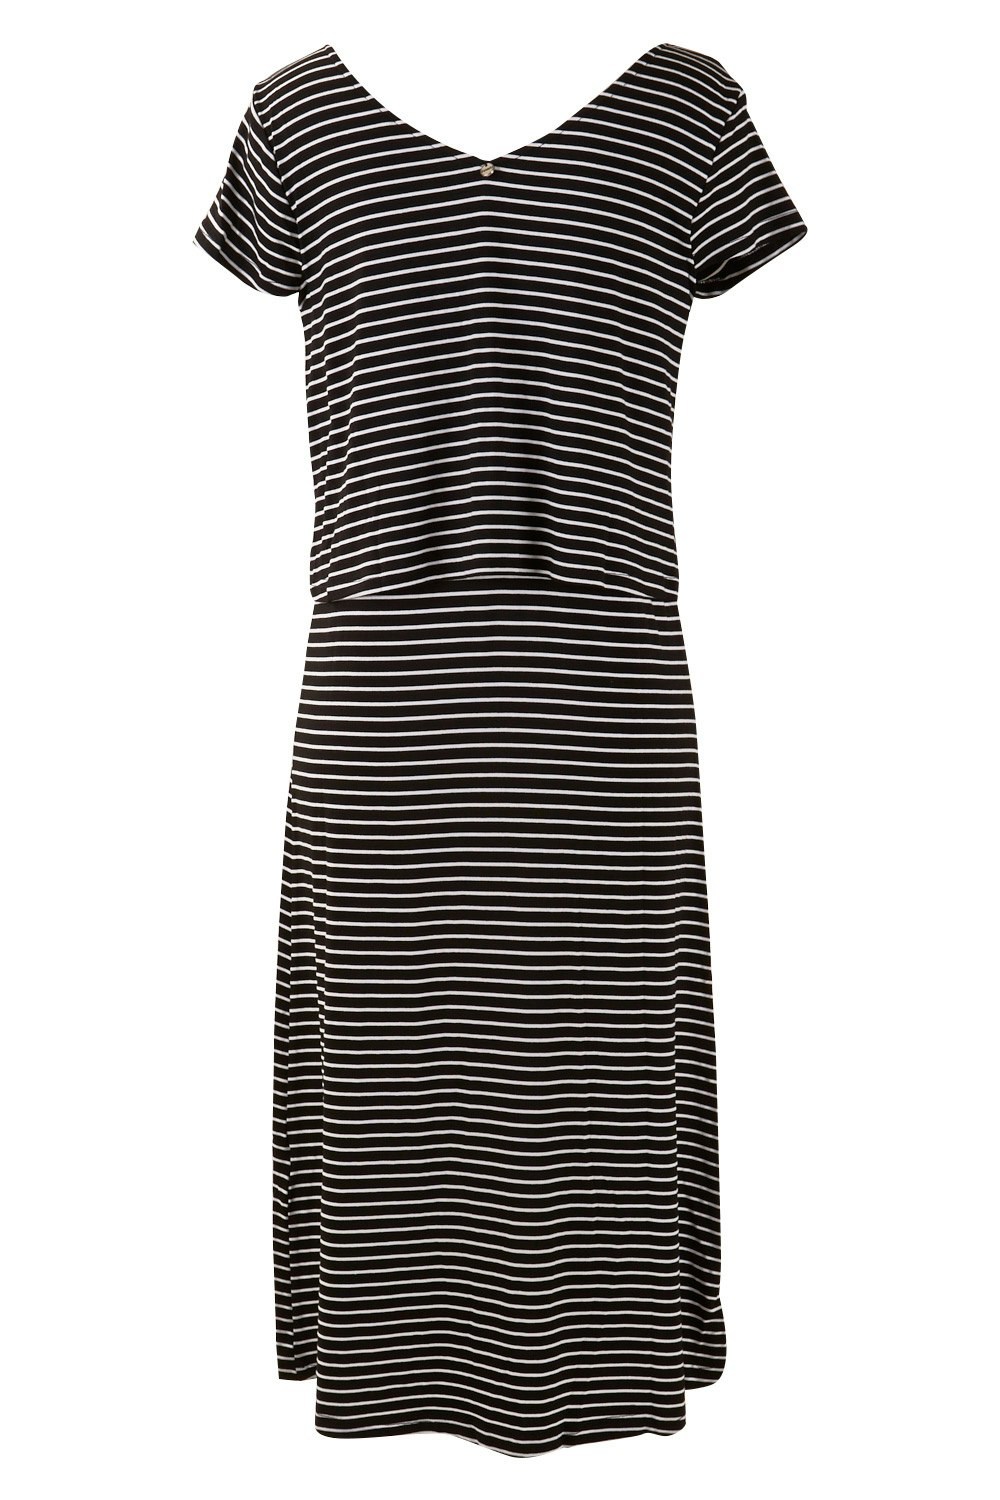 Threadz clothing 2/1 Stripe Dress - Womens Calf Length Dresses 